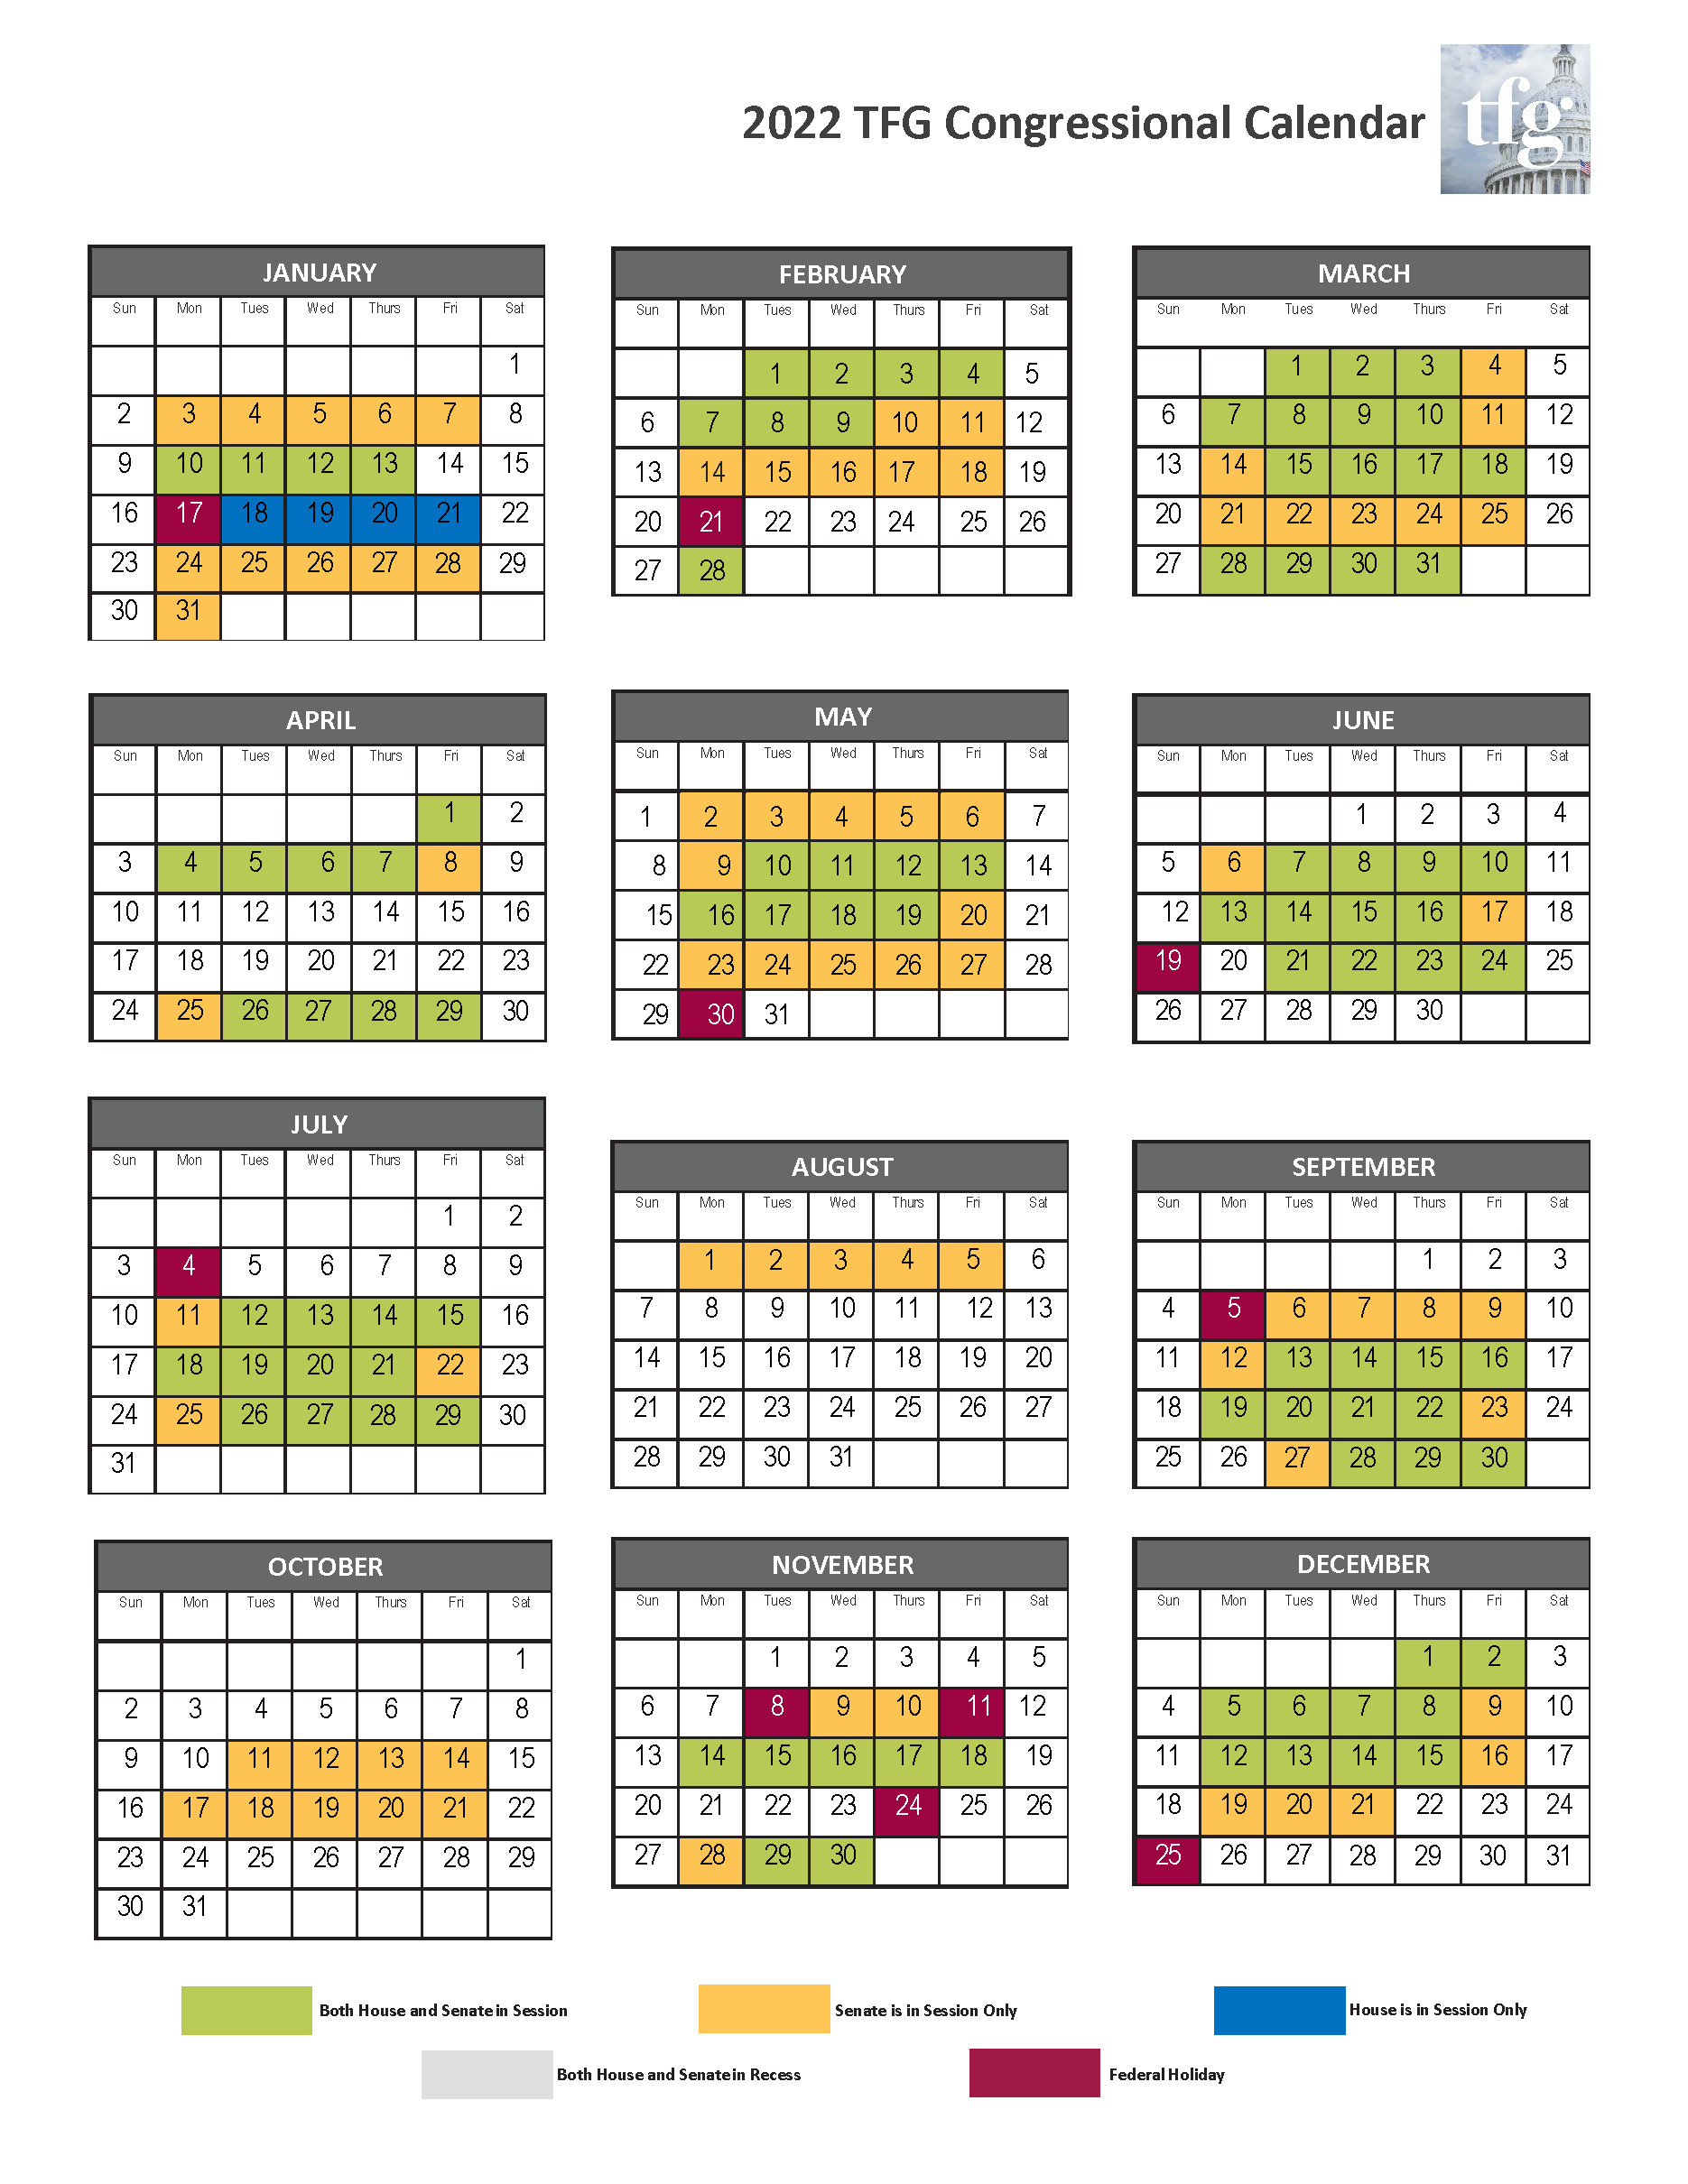 Congress Calendar 2022 2022 Congressional Calendar